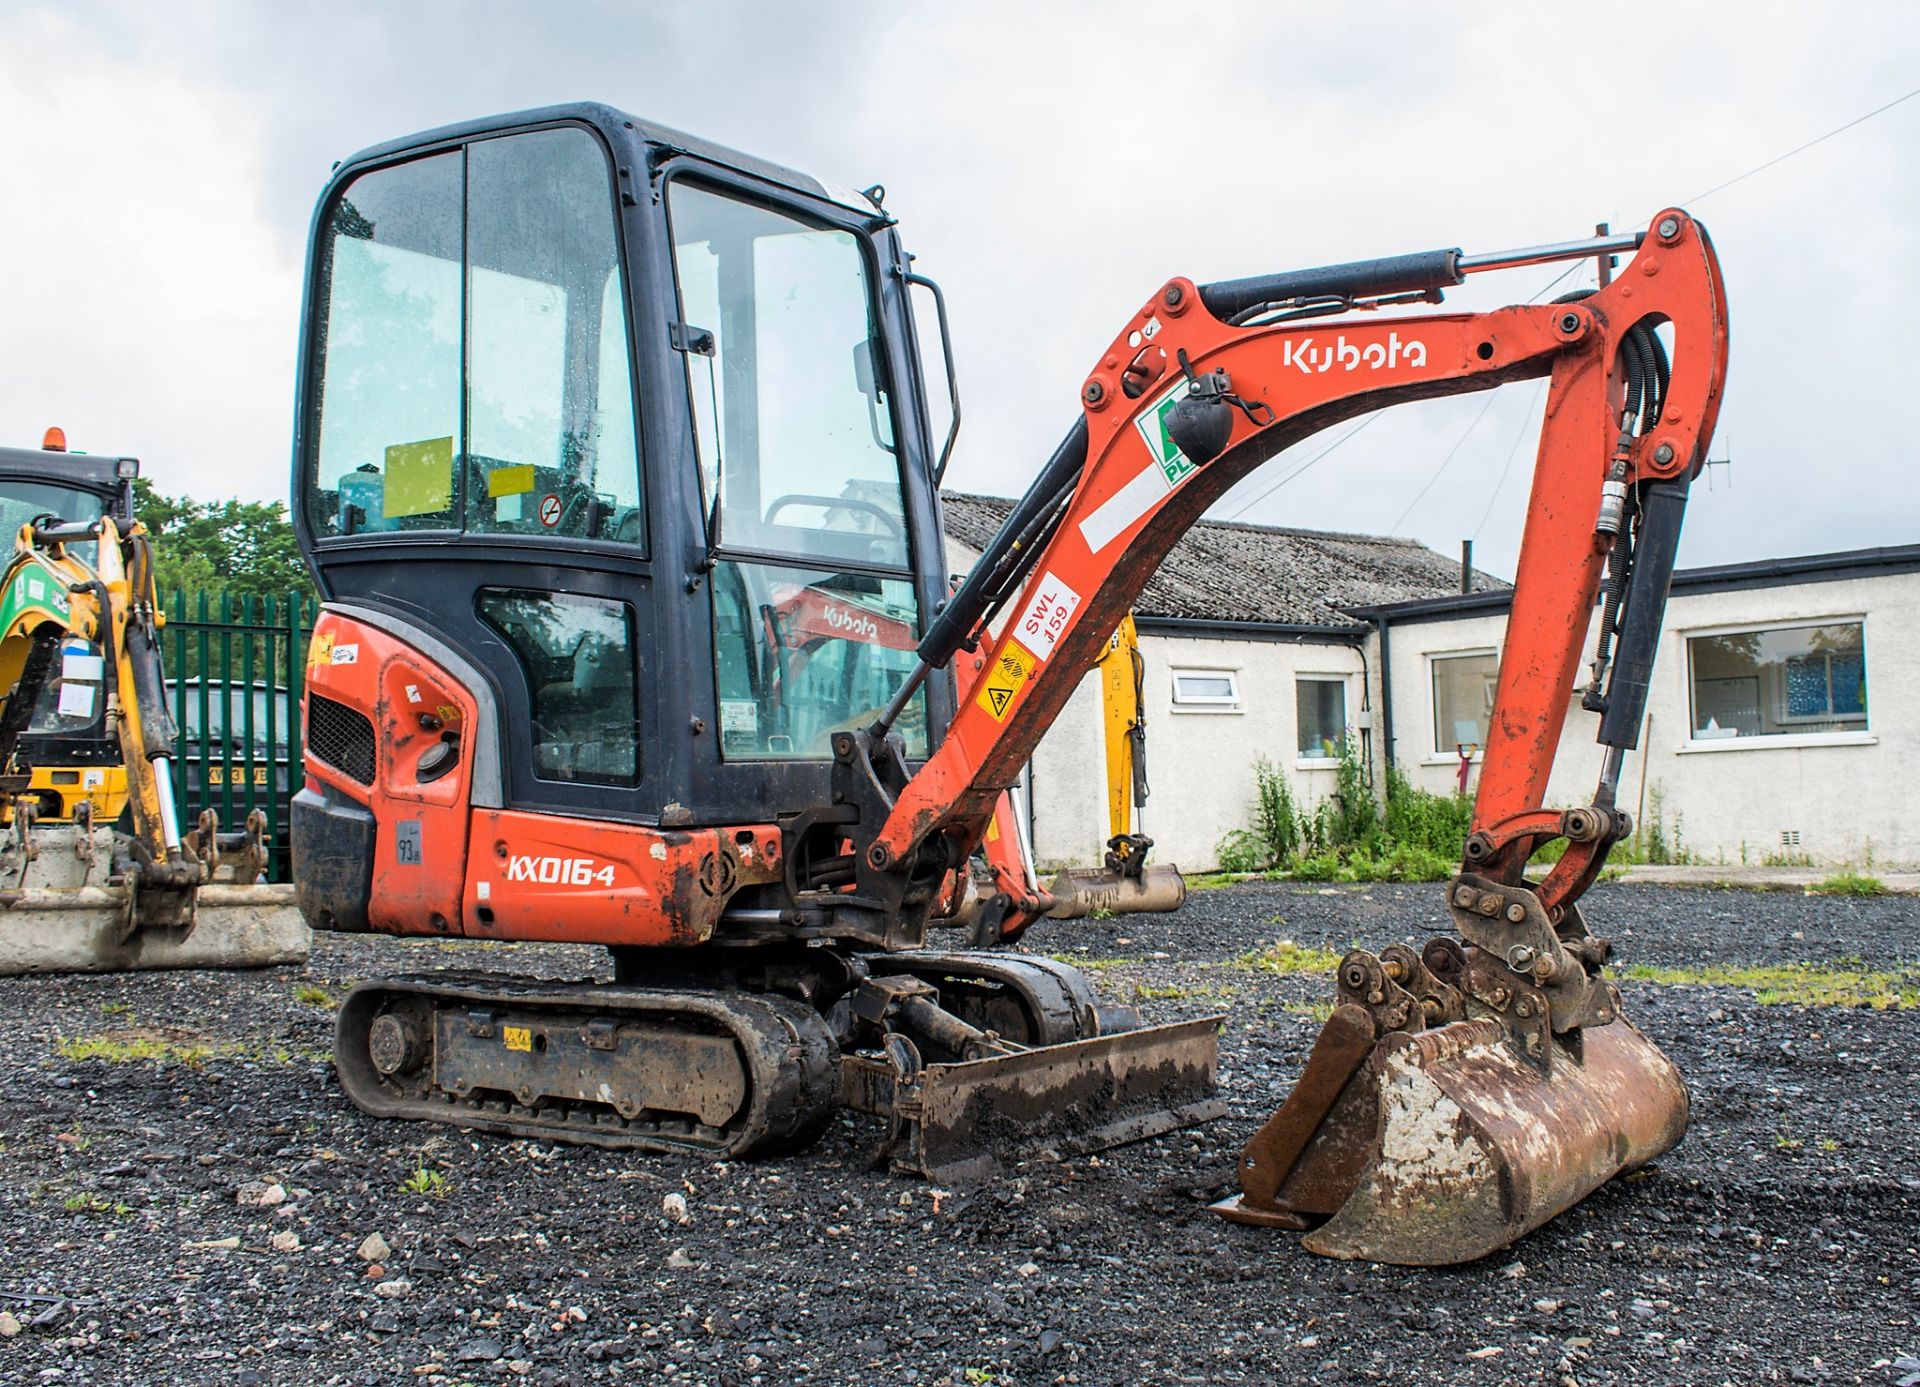 Kubota KX016-4 1.6 tonne rubber tracked mini excavator Year: 2014 S/N: 57528 Recorded Hours: 2621 - Image 2 of 19